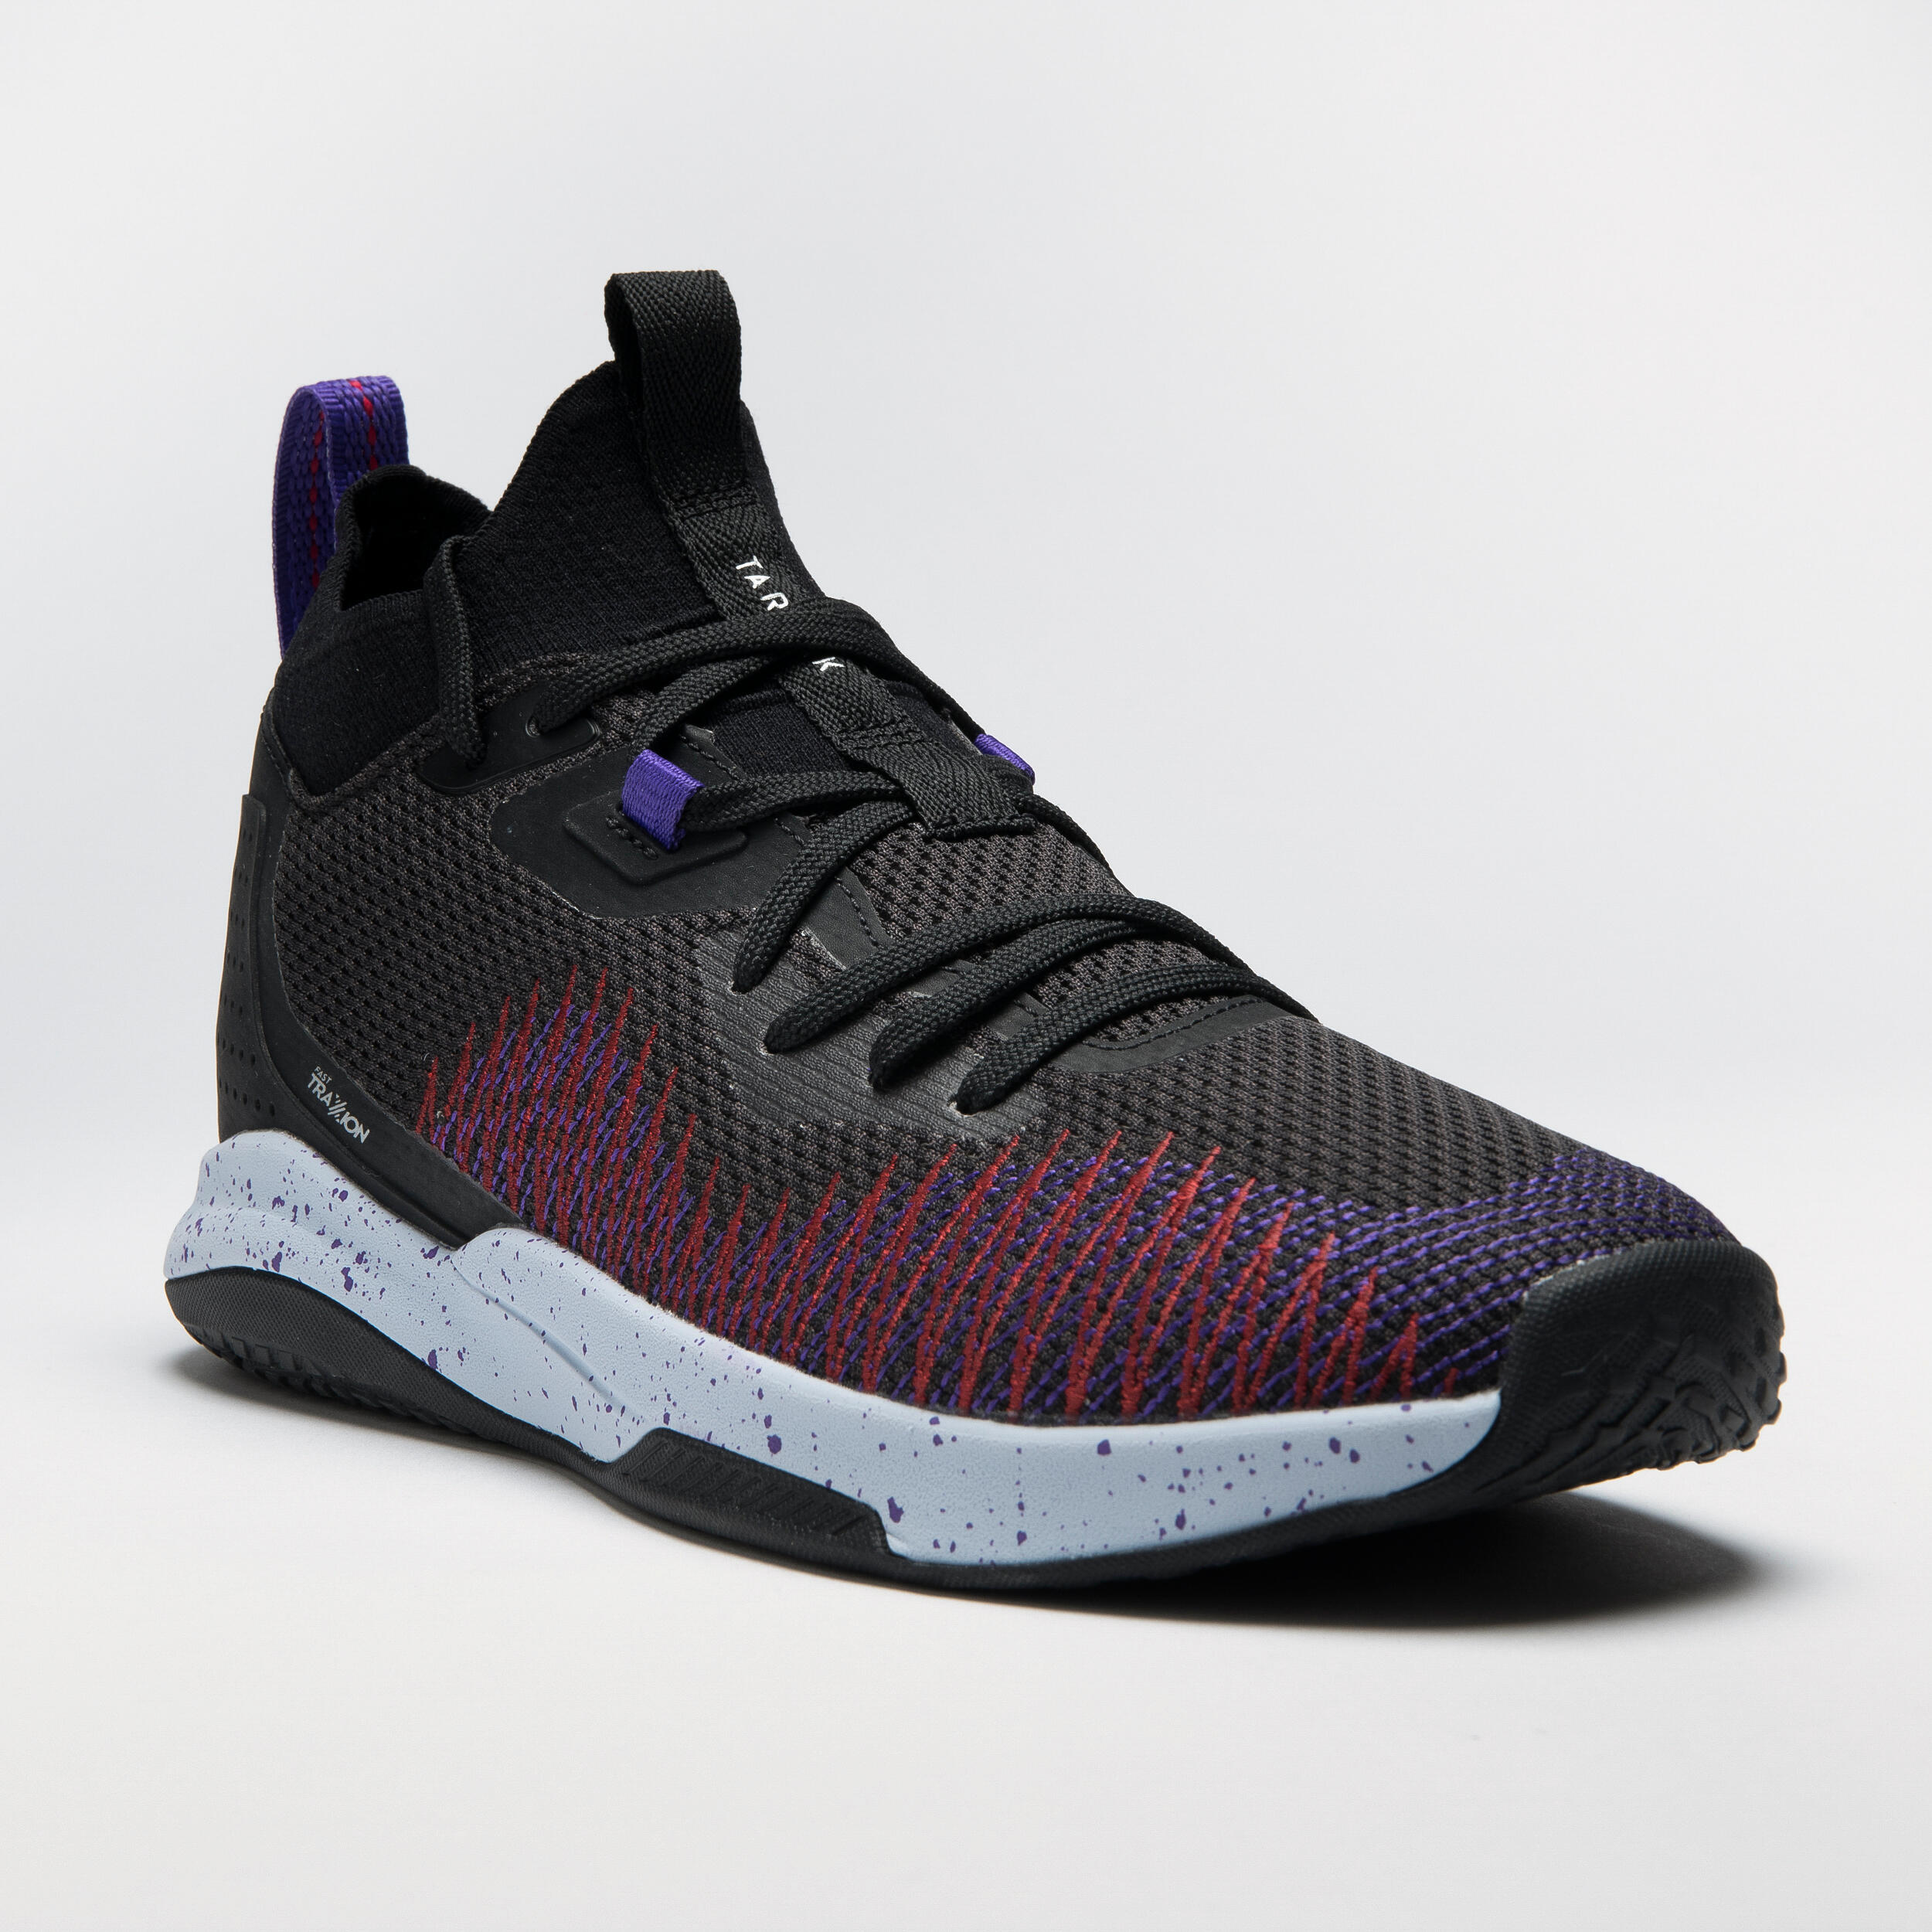 Women's Basketball Shoes Fast 500 - Black/Purple 4/8